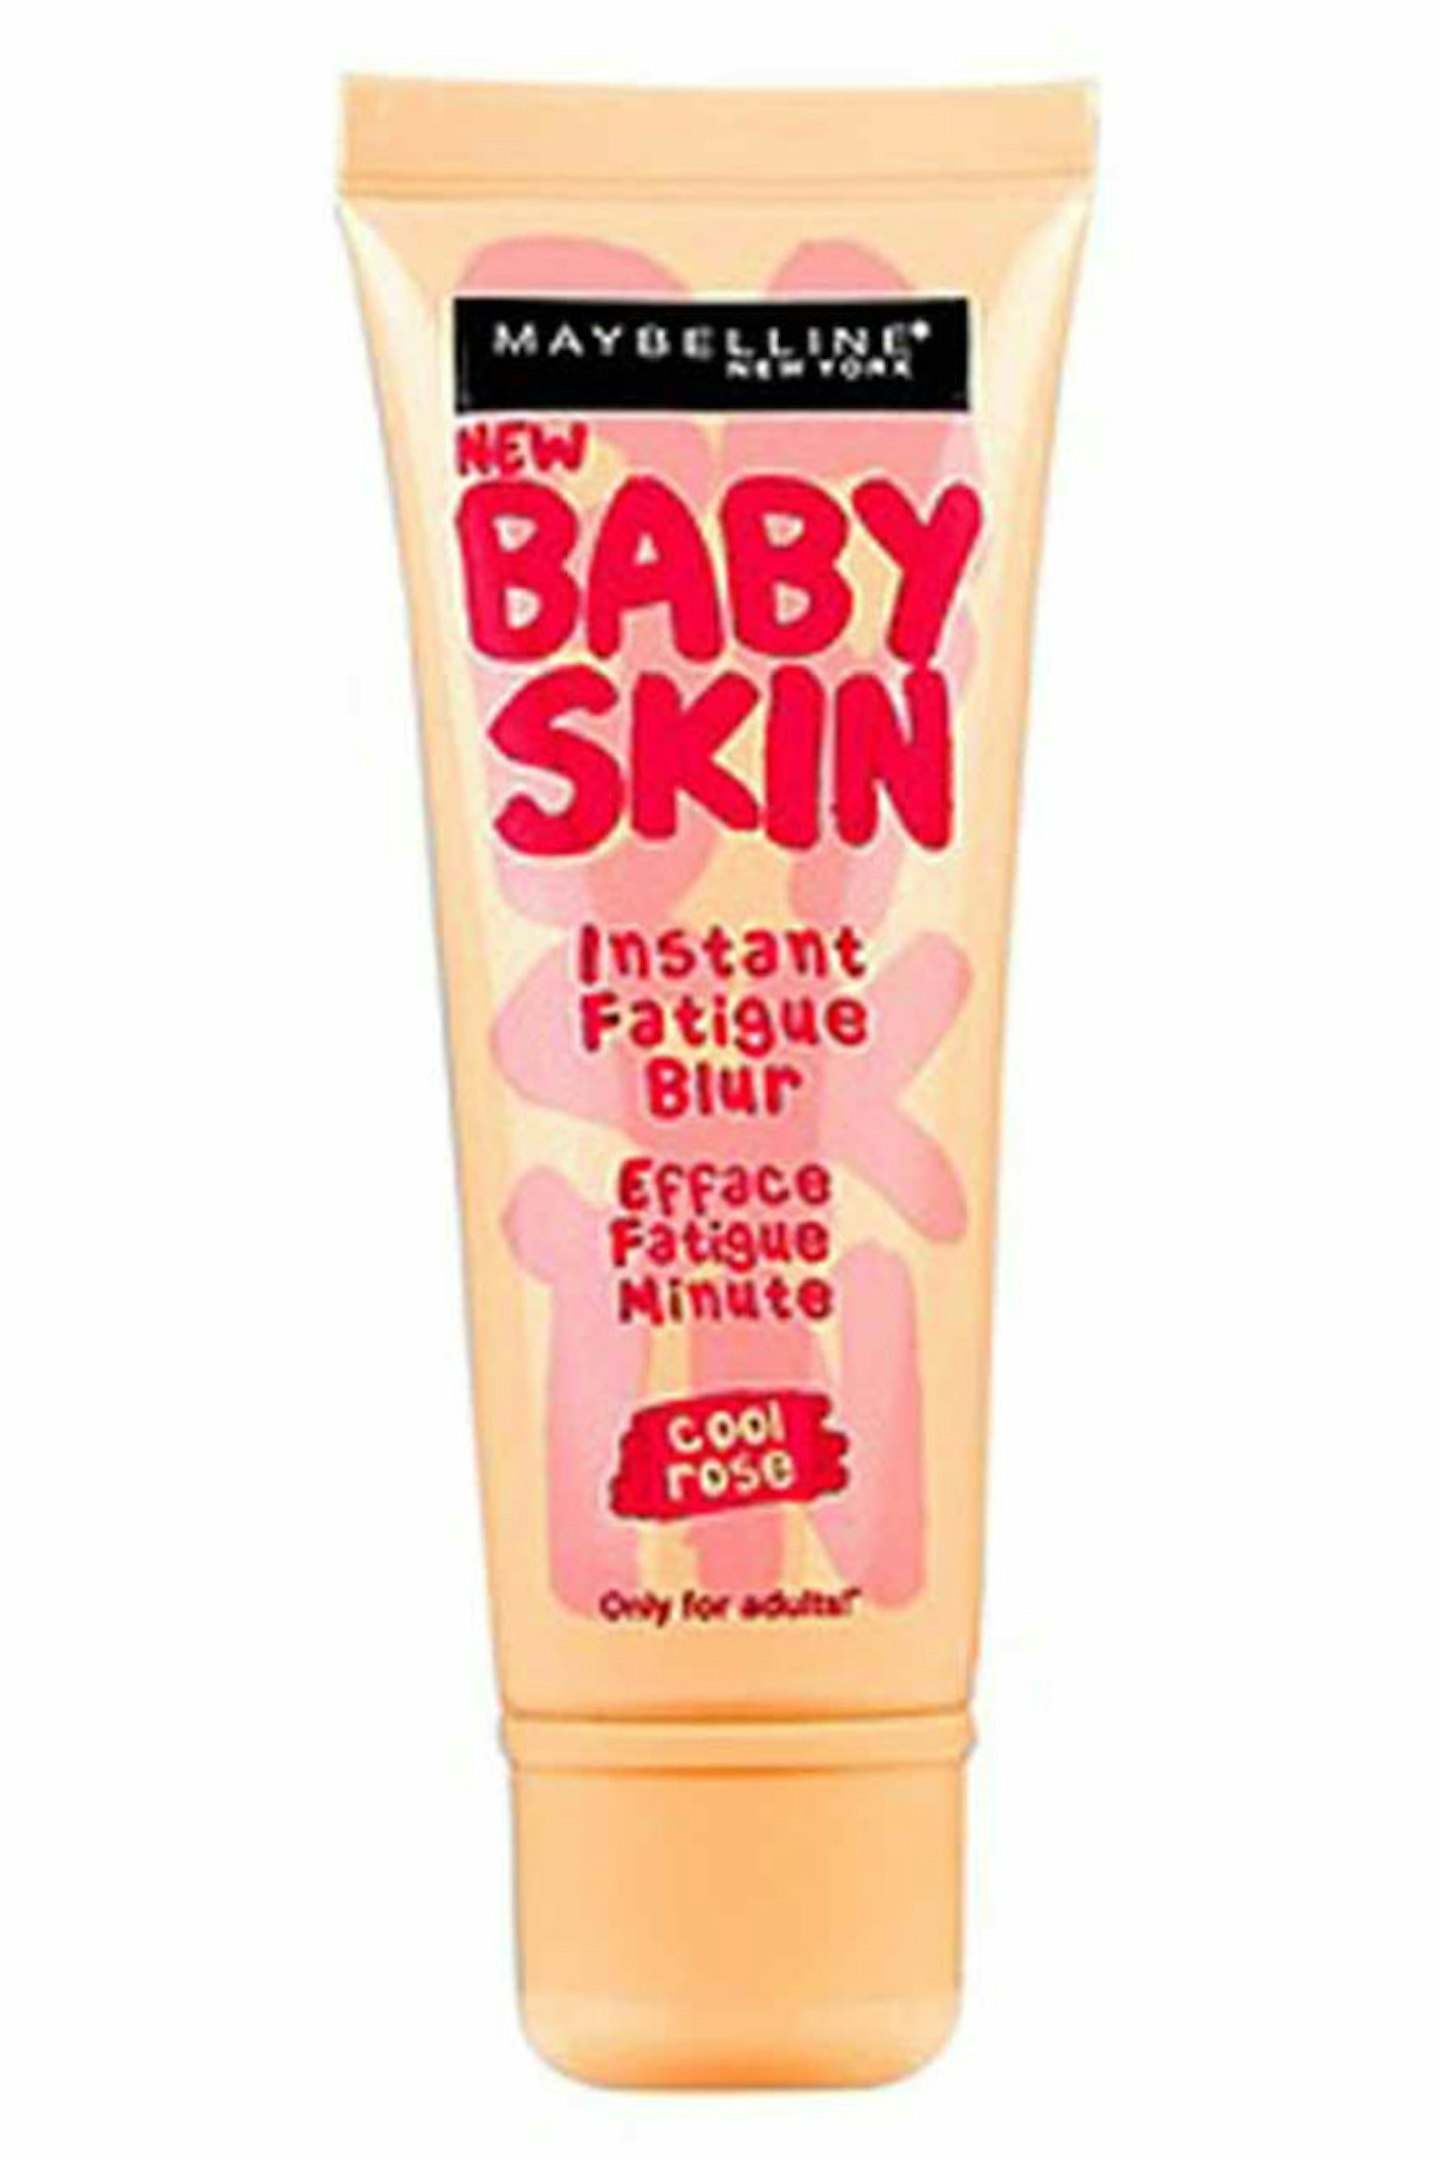 6. Maybelline Baby Skin Instant Fatigue Blur Primer, £7.99